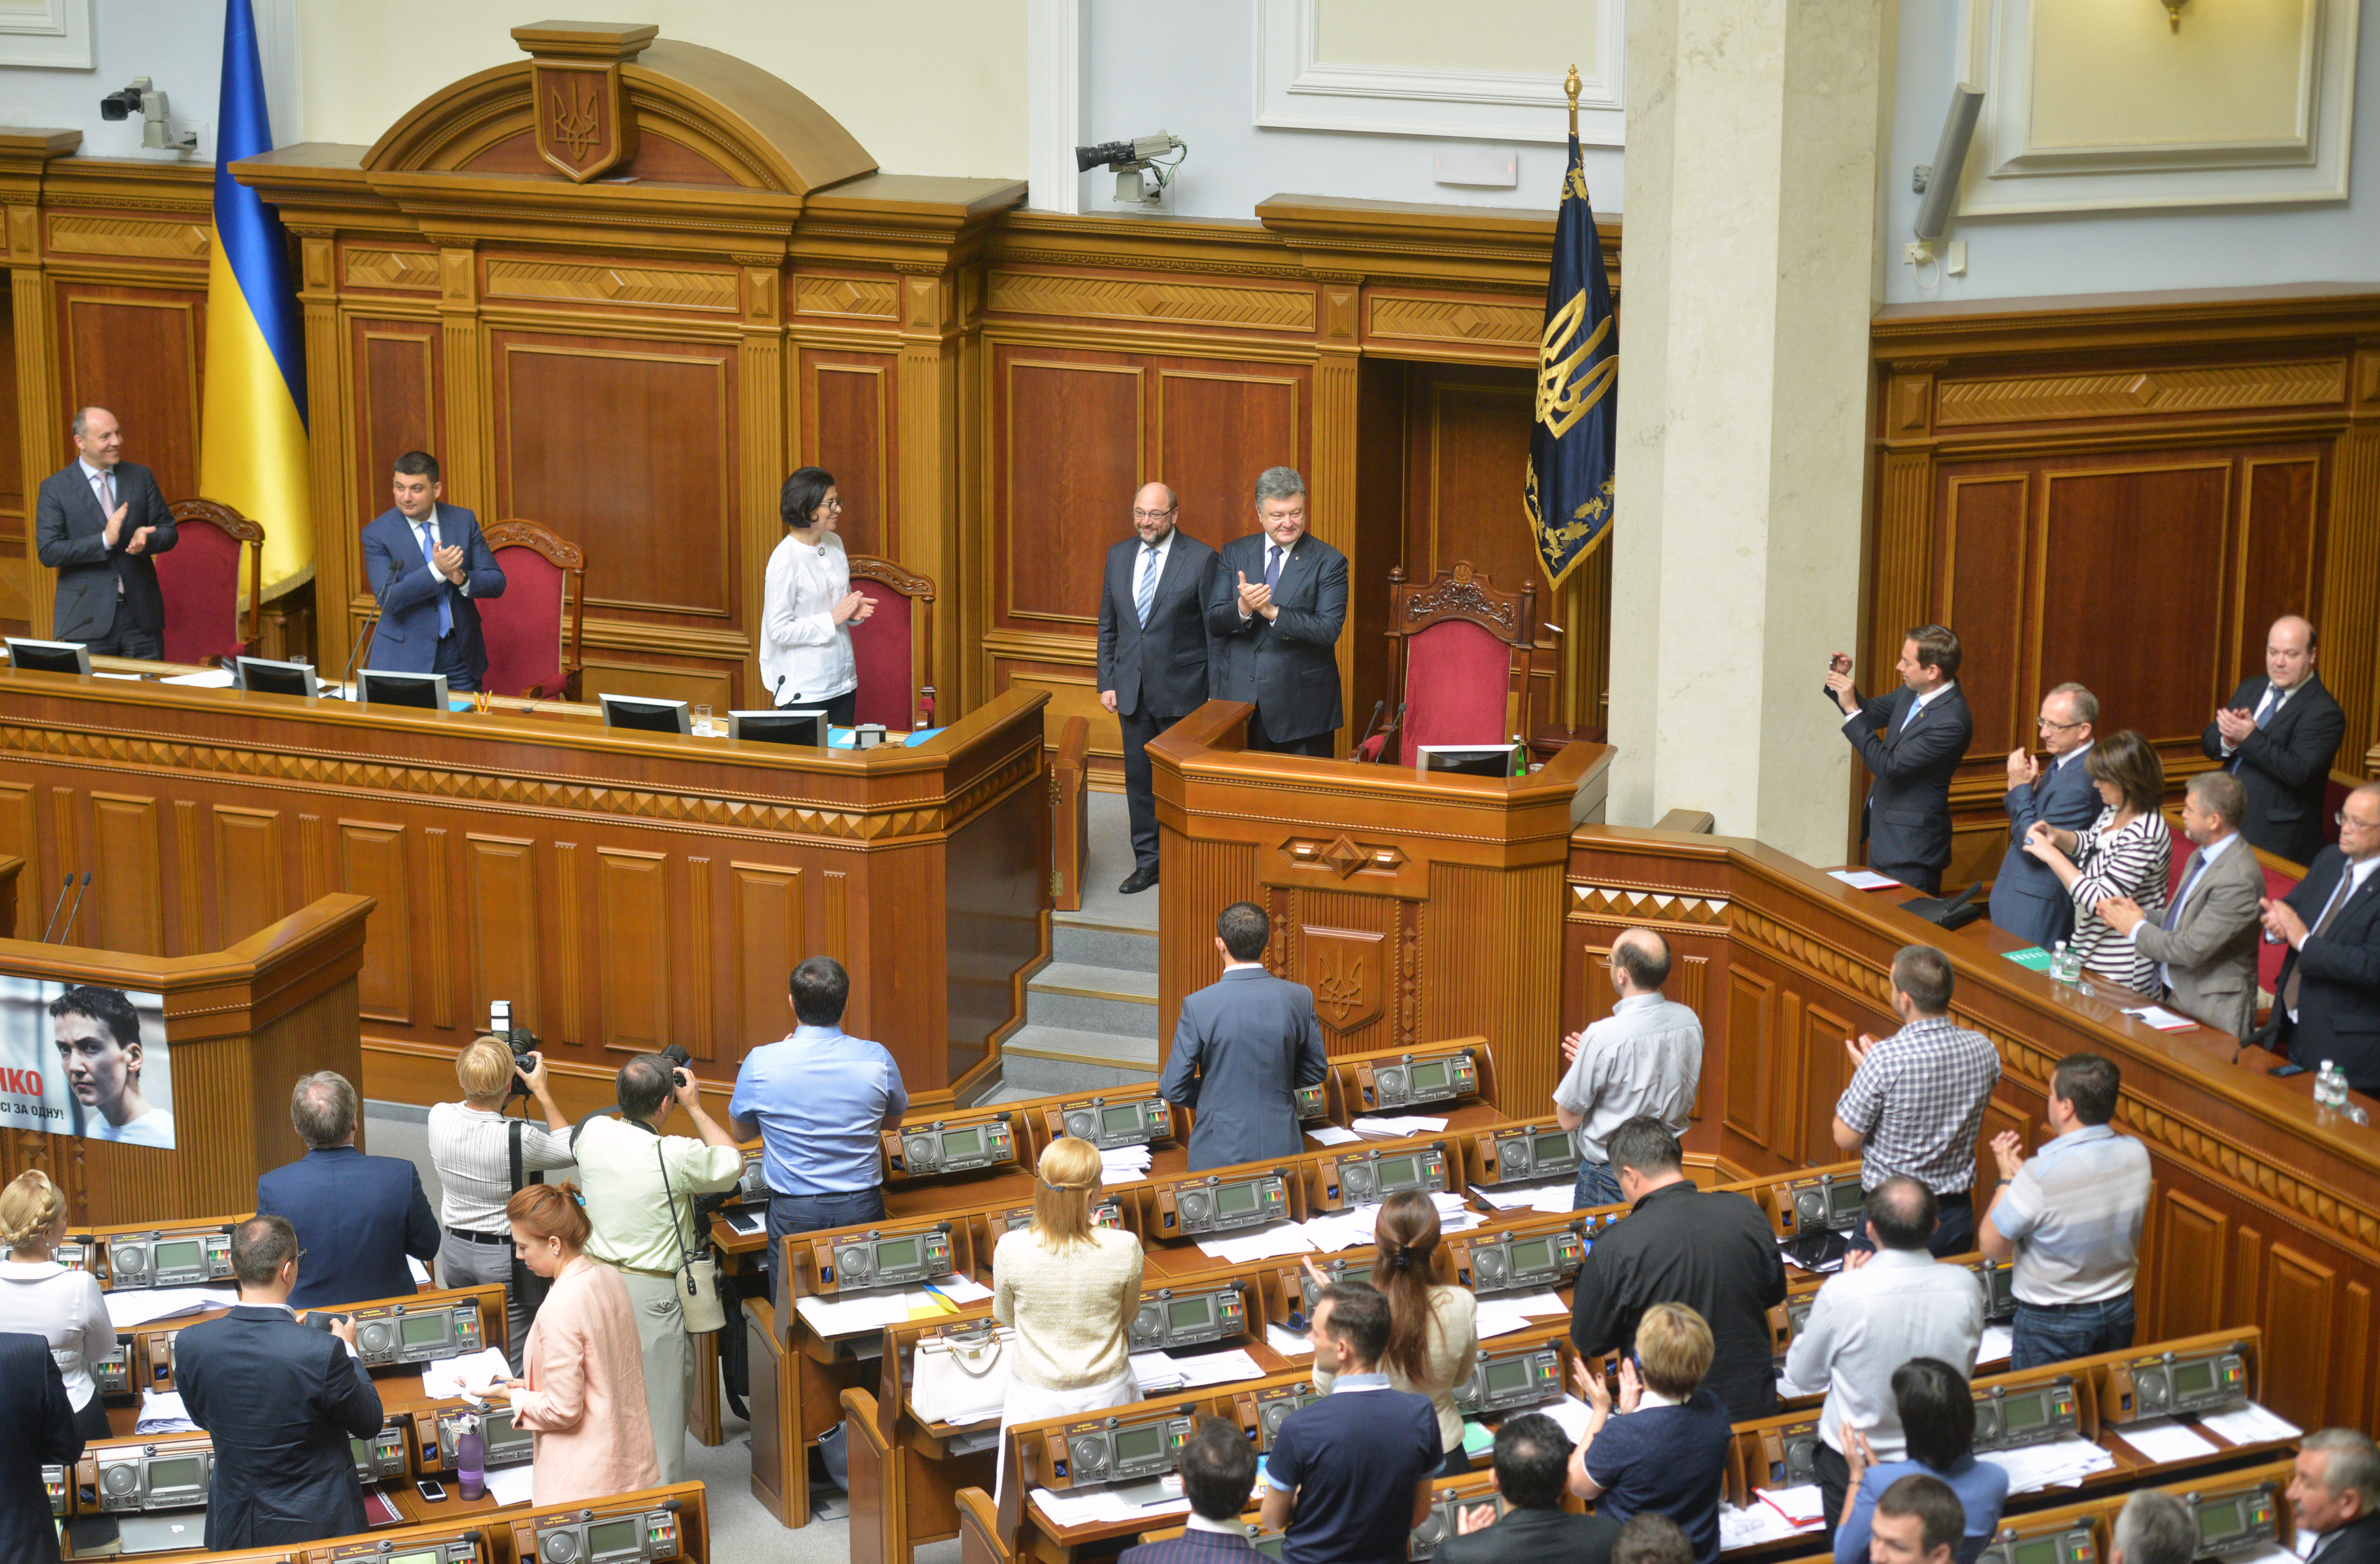 Verkhovna Rada of Ukraine (photo credit: Martin Schulz/flickr)